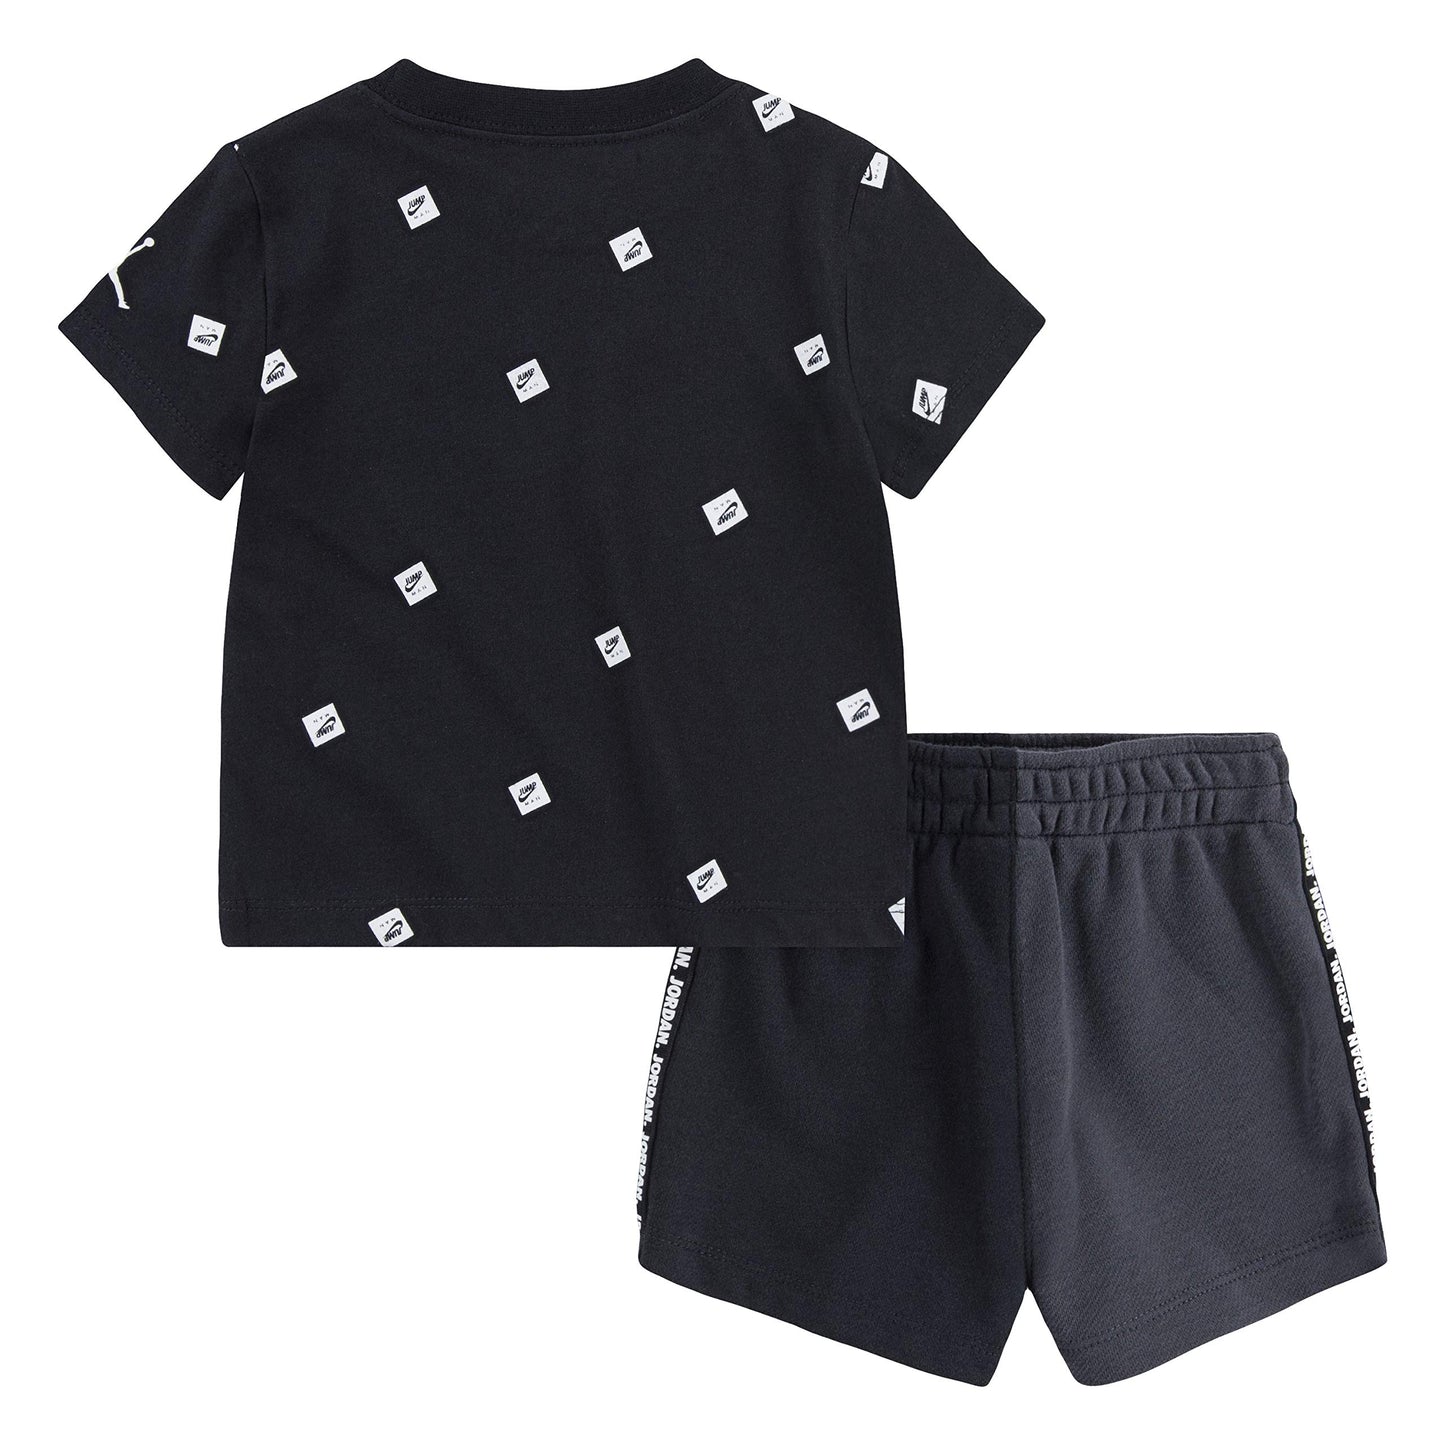 Image 2 of Jordan Jumpman Box Tee/Shorts Set (Infant)